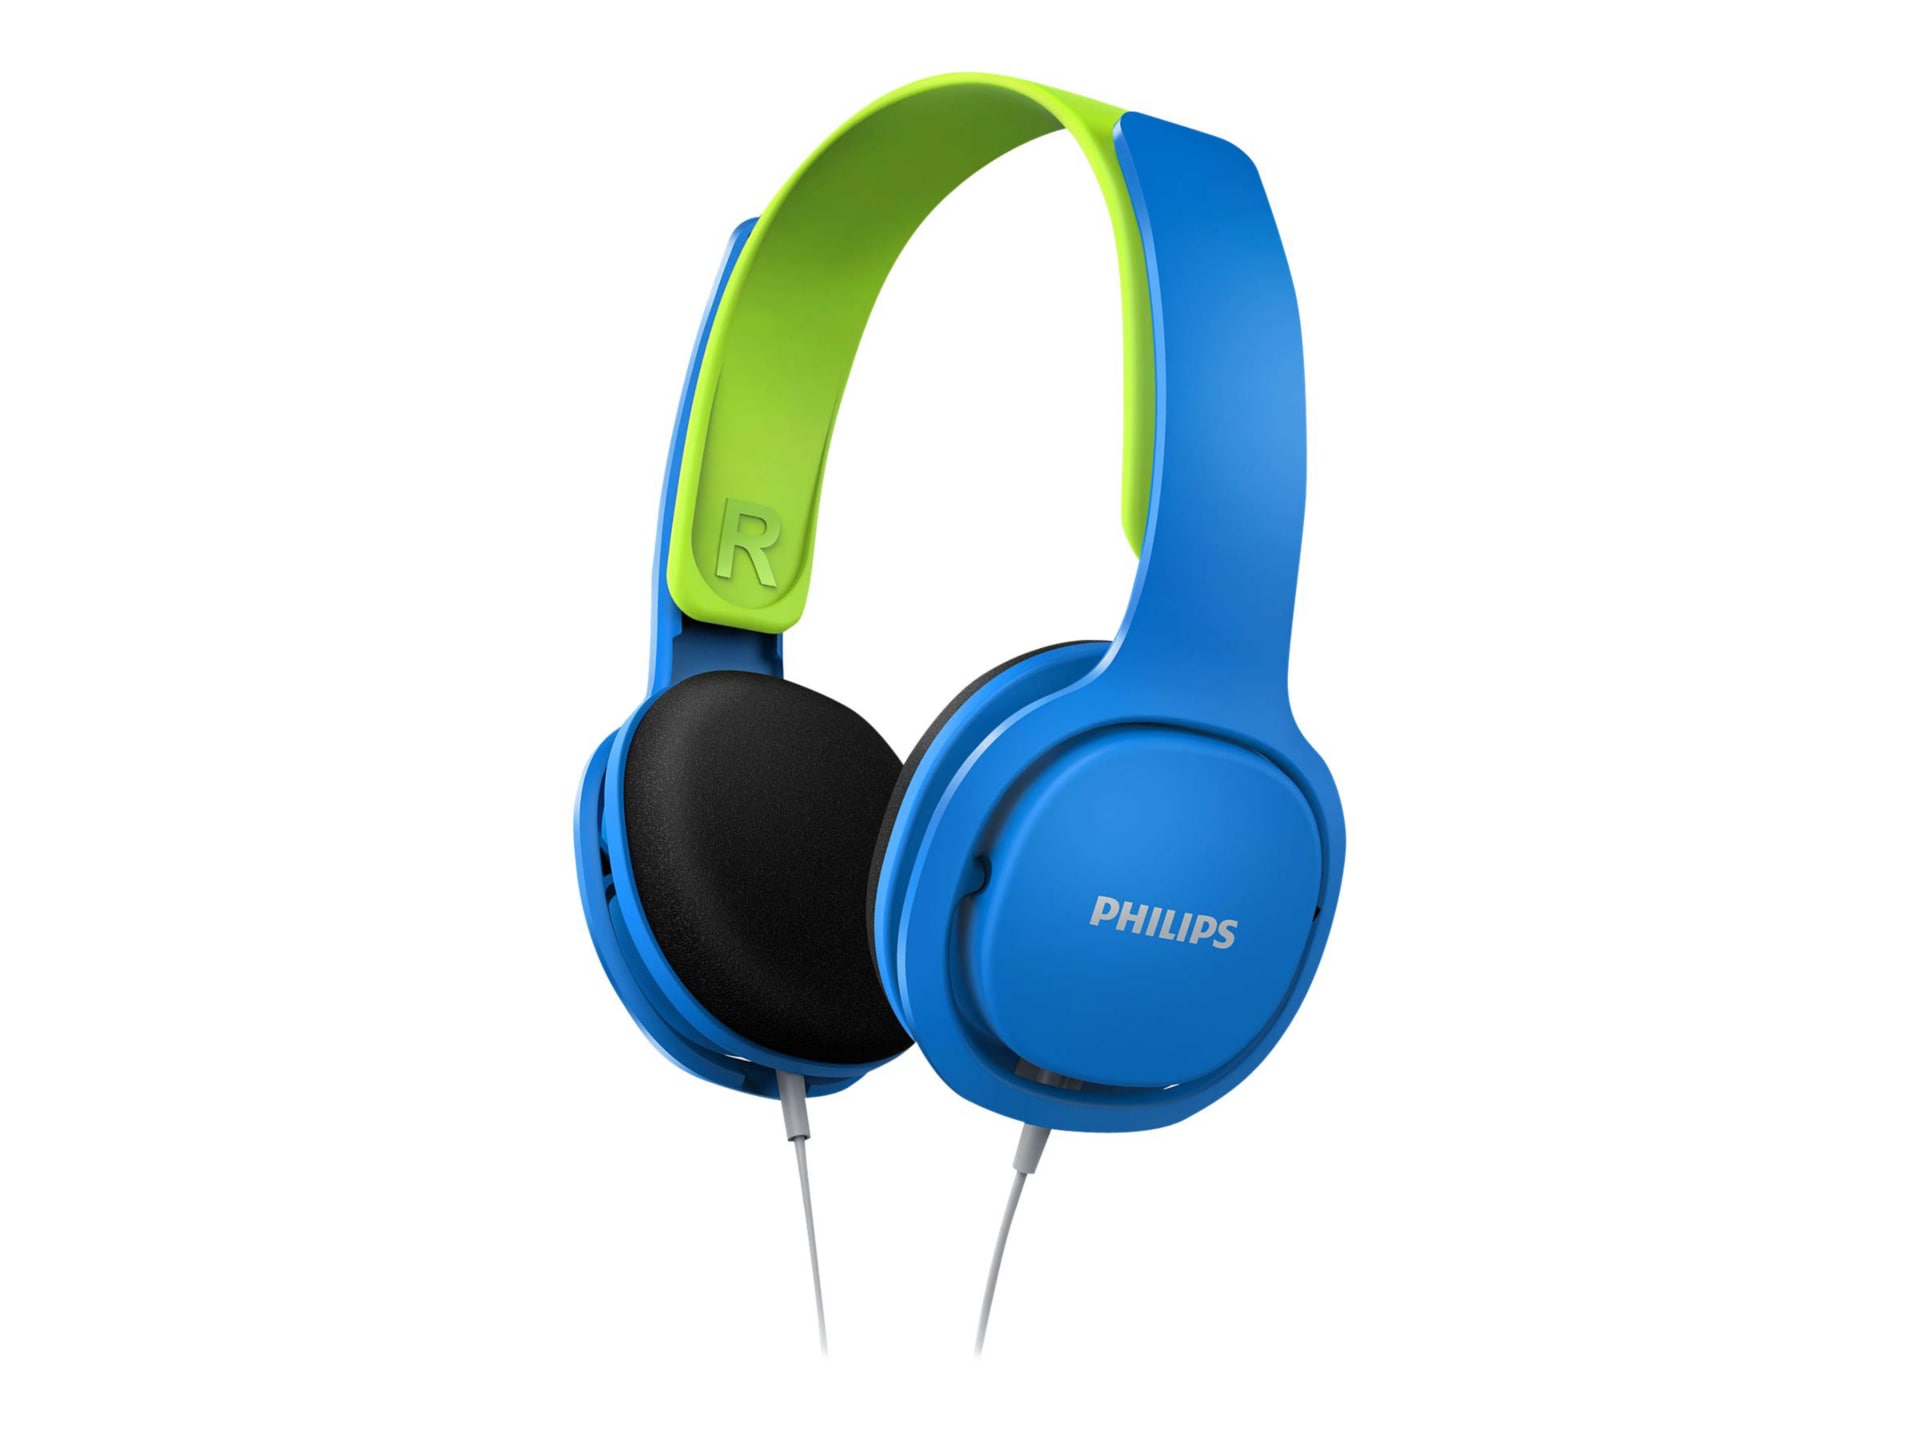 Philips SHK200BL Kids Headphone - Blue